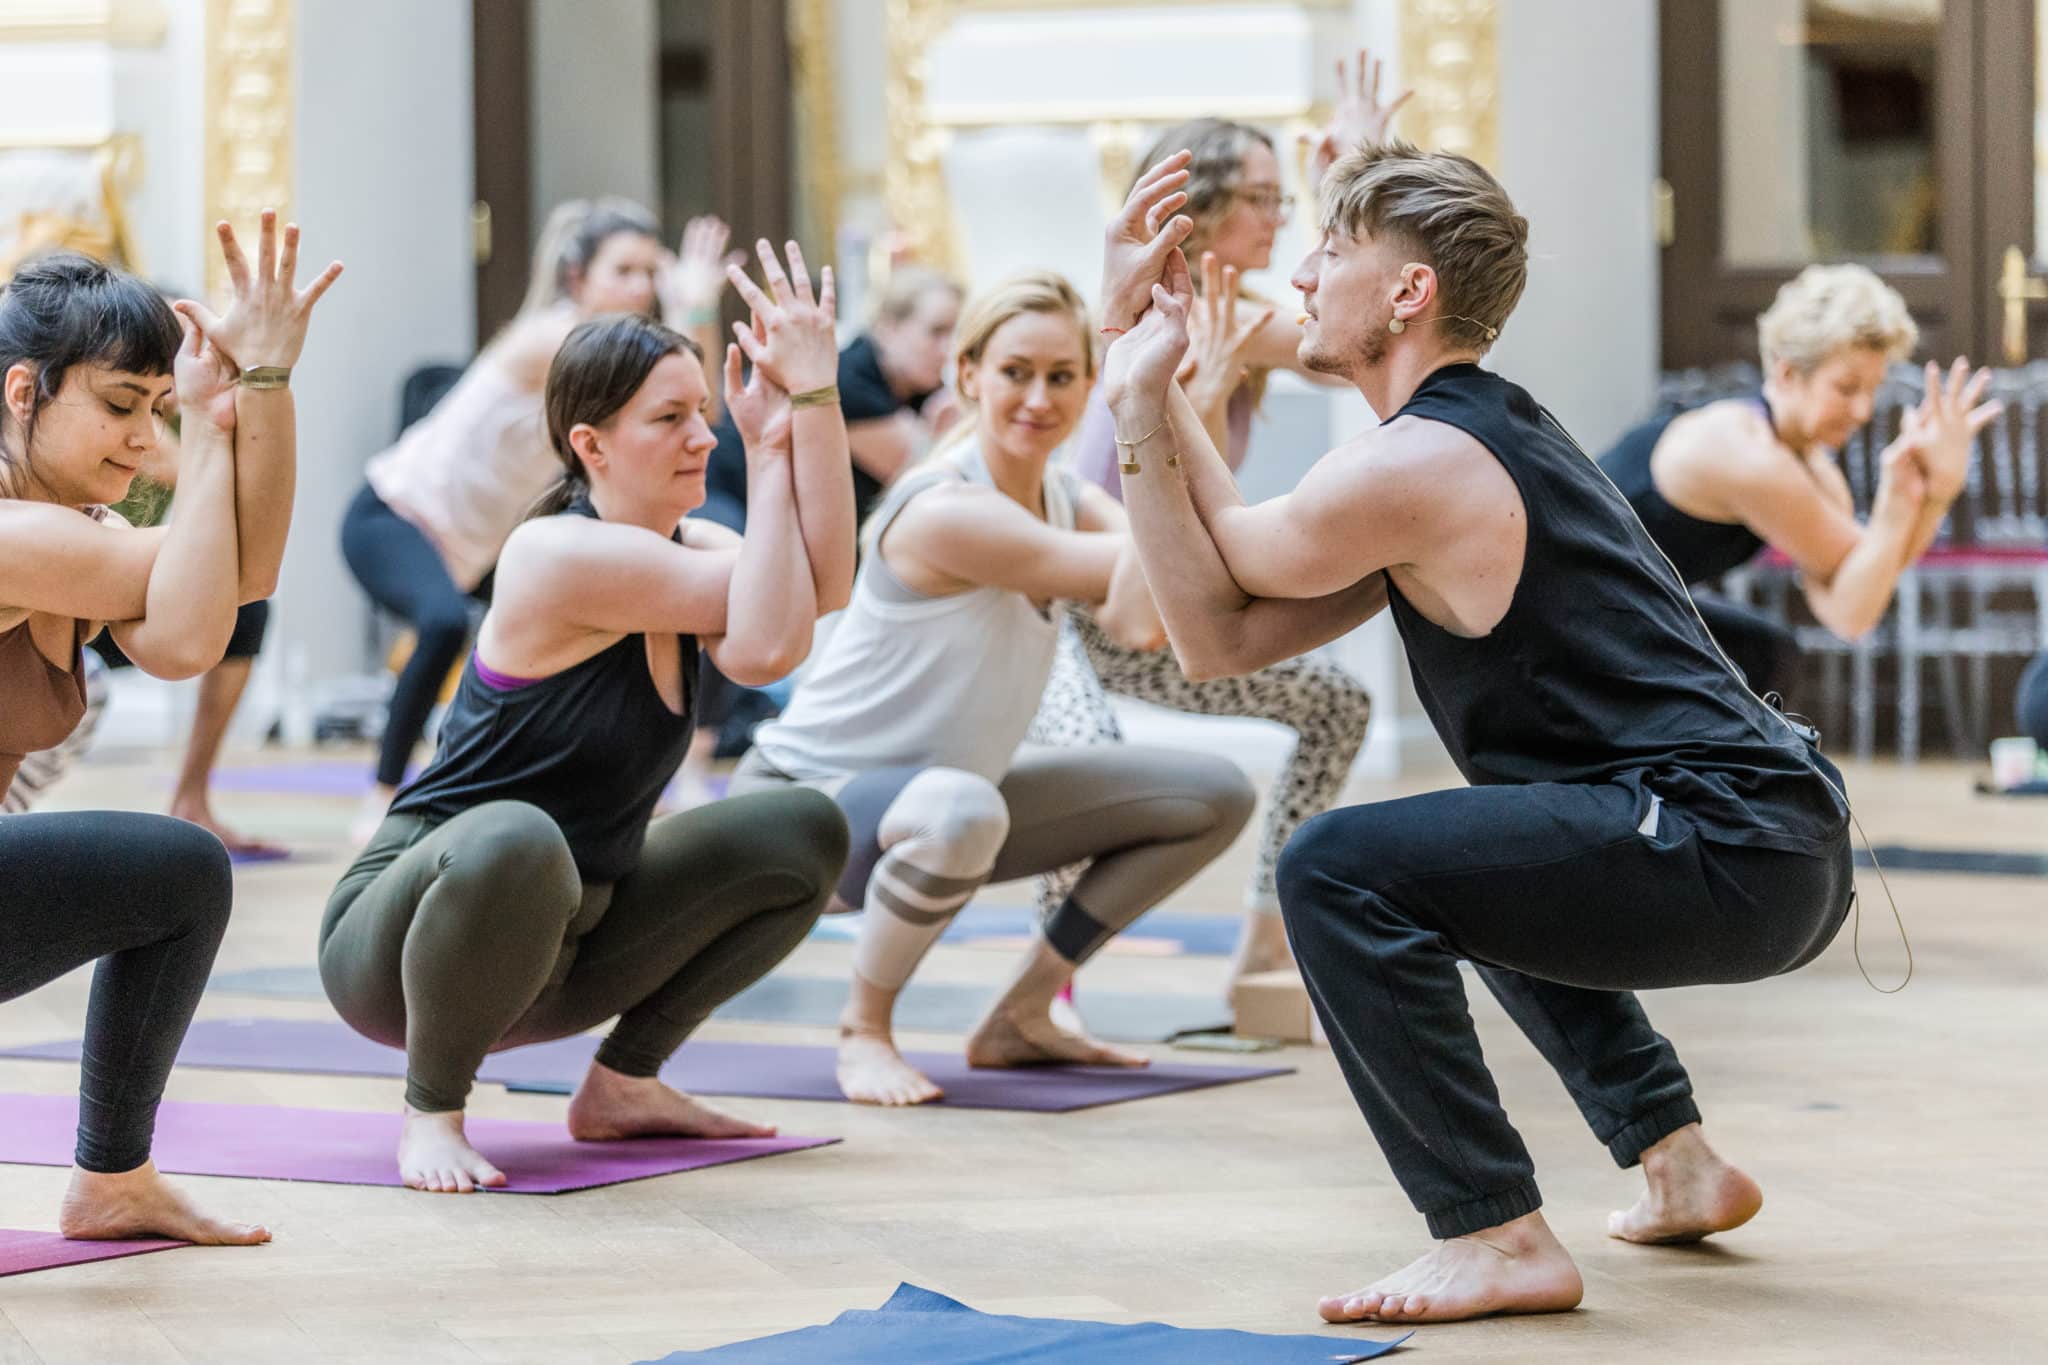 Yogalehrer mit Yogis in Yogaposition